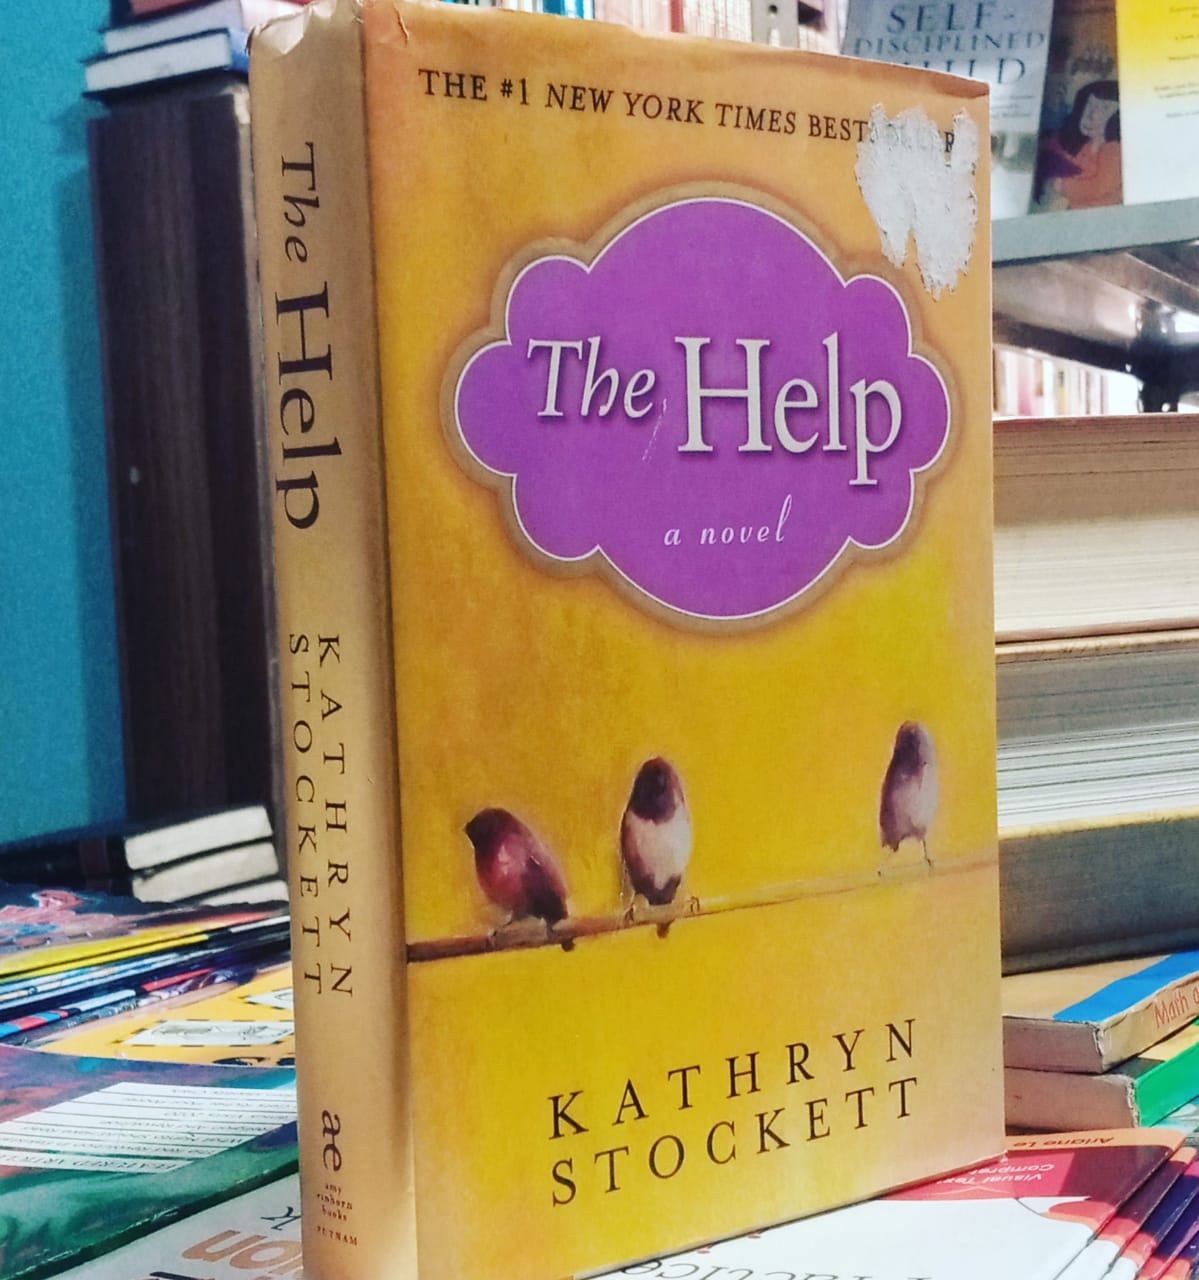 the help by kathryn stockett. original hardcover